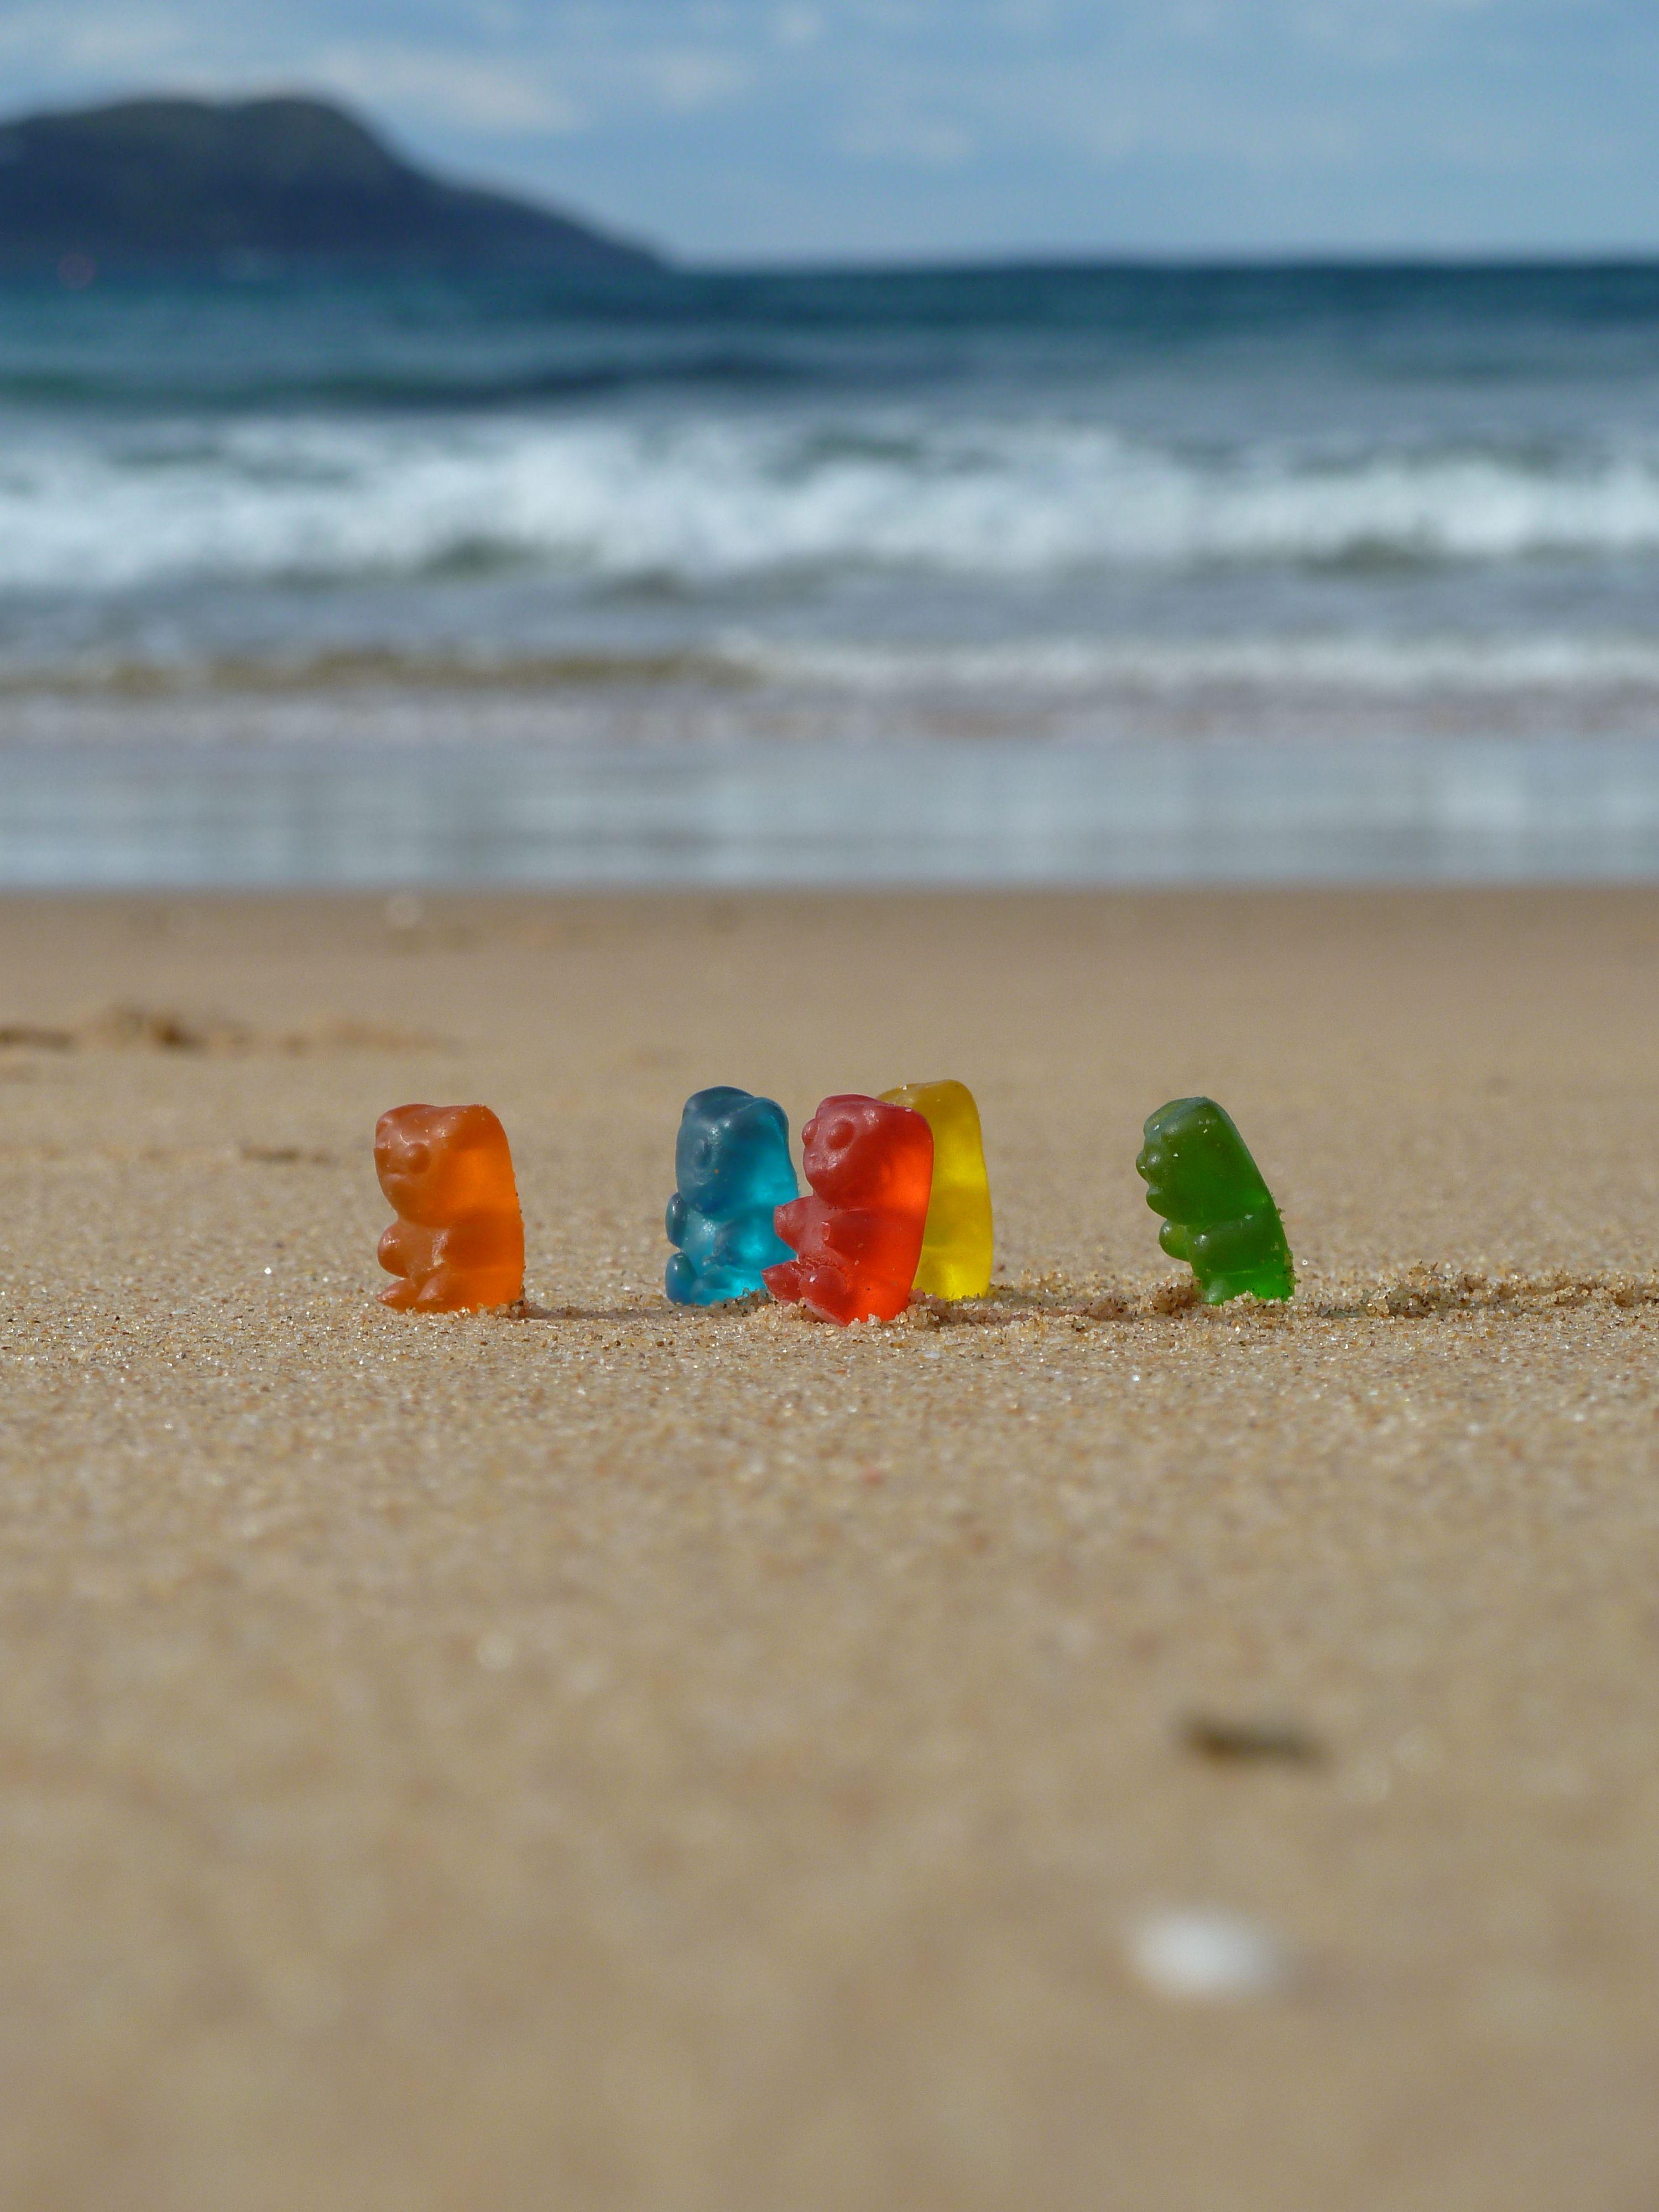 Gummi Bears go walking. Gummy bears, Gummy candy, Haribo gummy bears